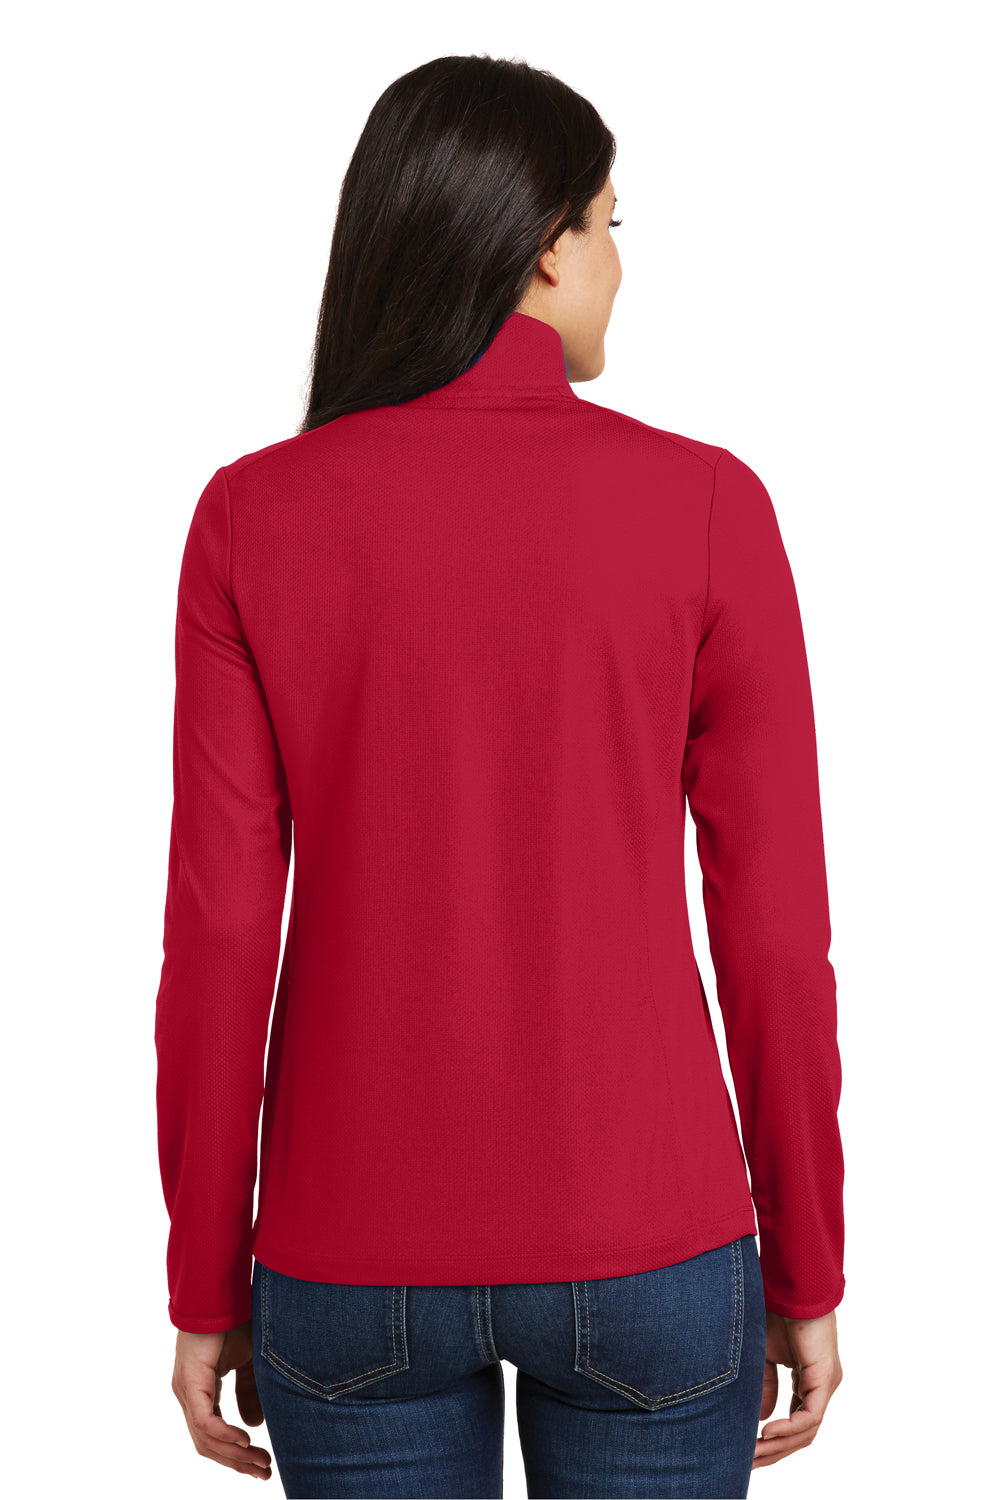 Port Authority L806 Womens Moisture Wicking 1/4 Zip Sweatshirt Red Back